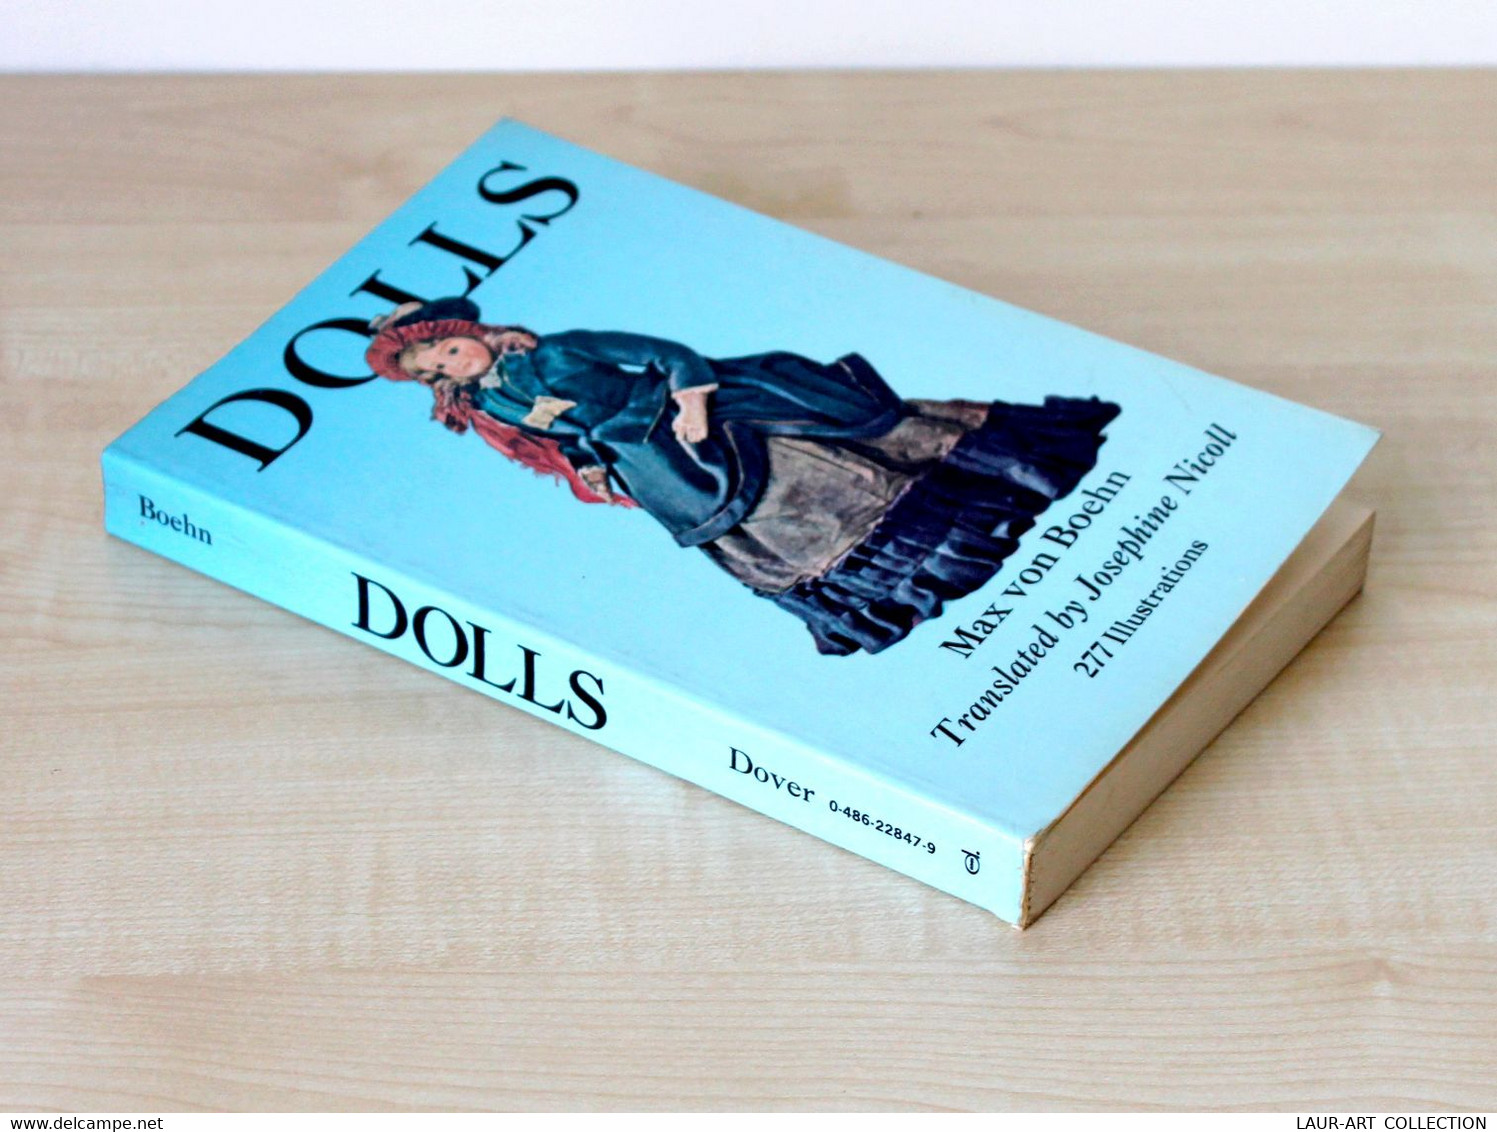 DOLLS - MAX VON BOEHN - BOOK 277 ILLUSTRATIONS  DOVER PUBLICATIONS, INC NEW-YORK         (0512.228) - Culture